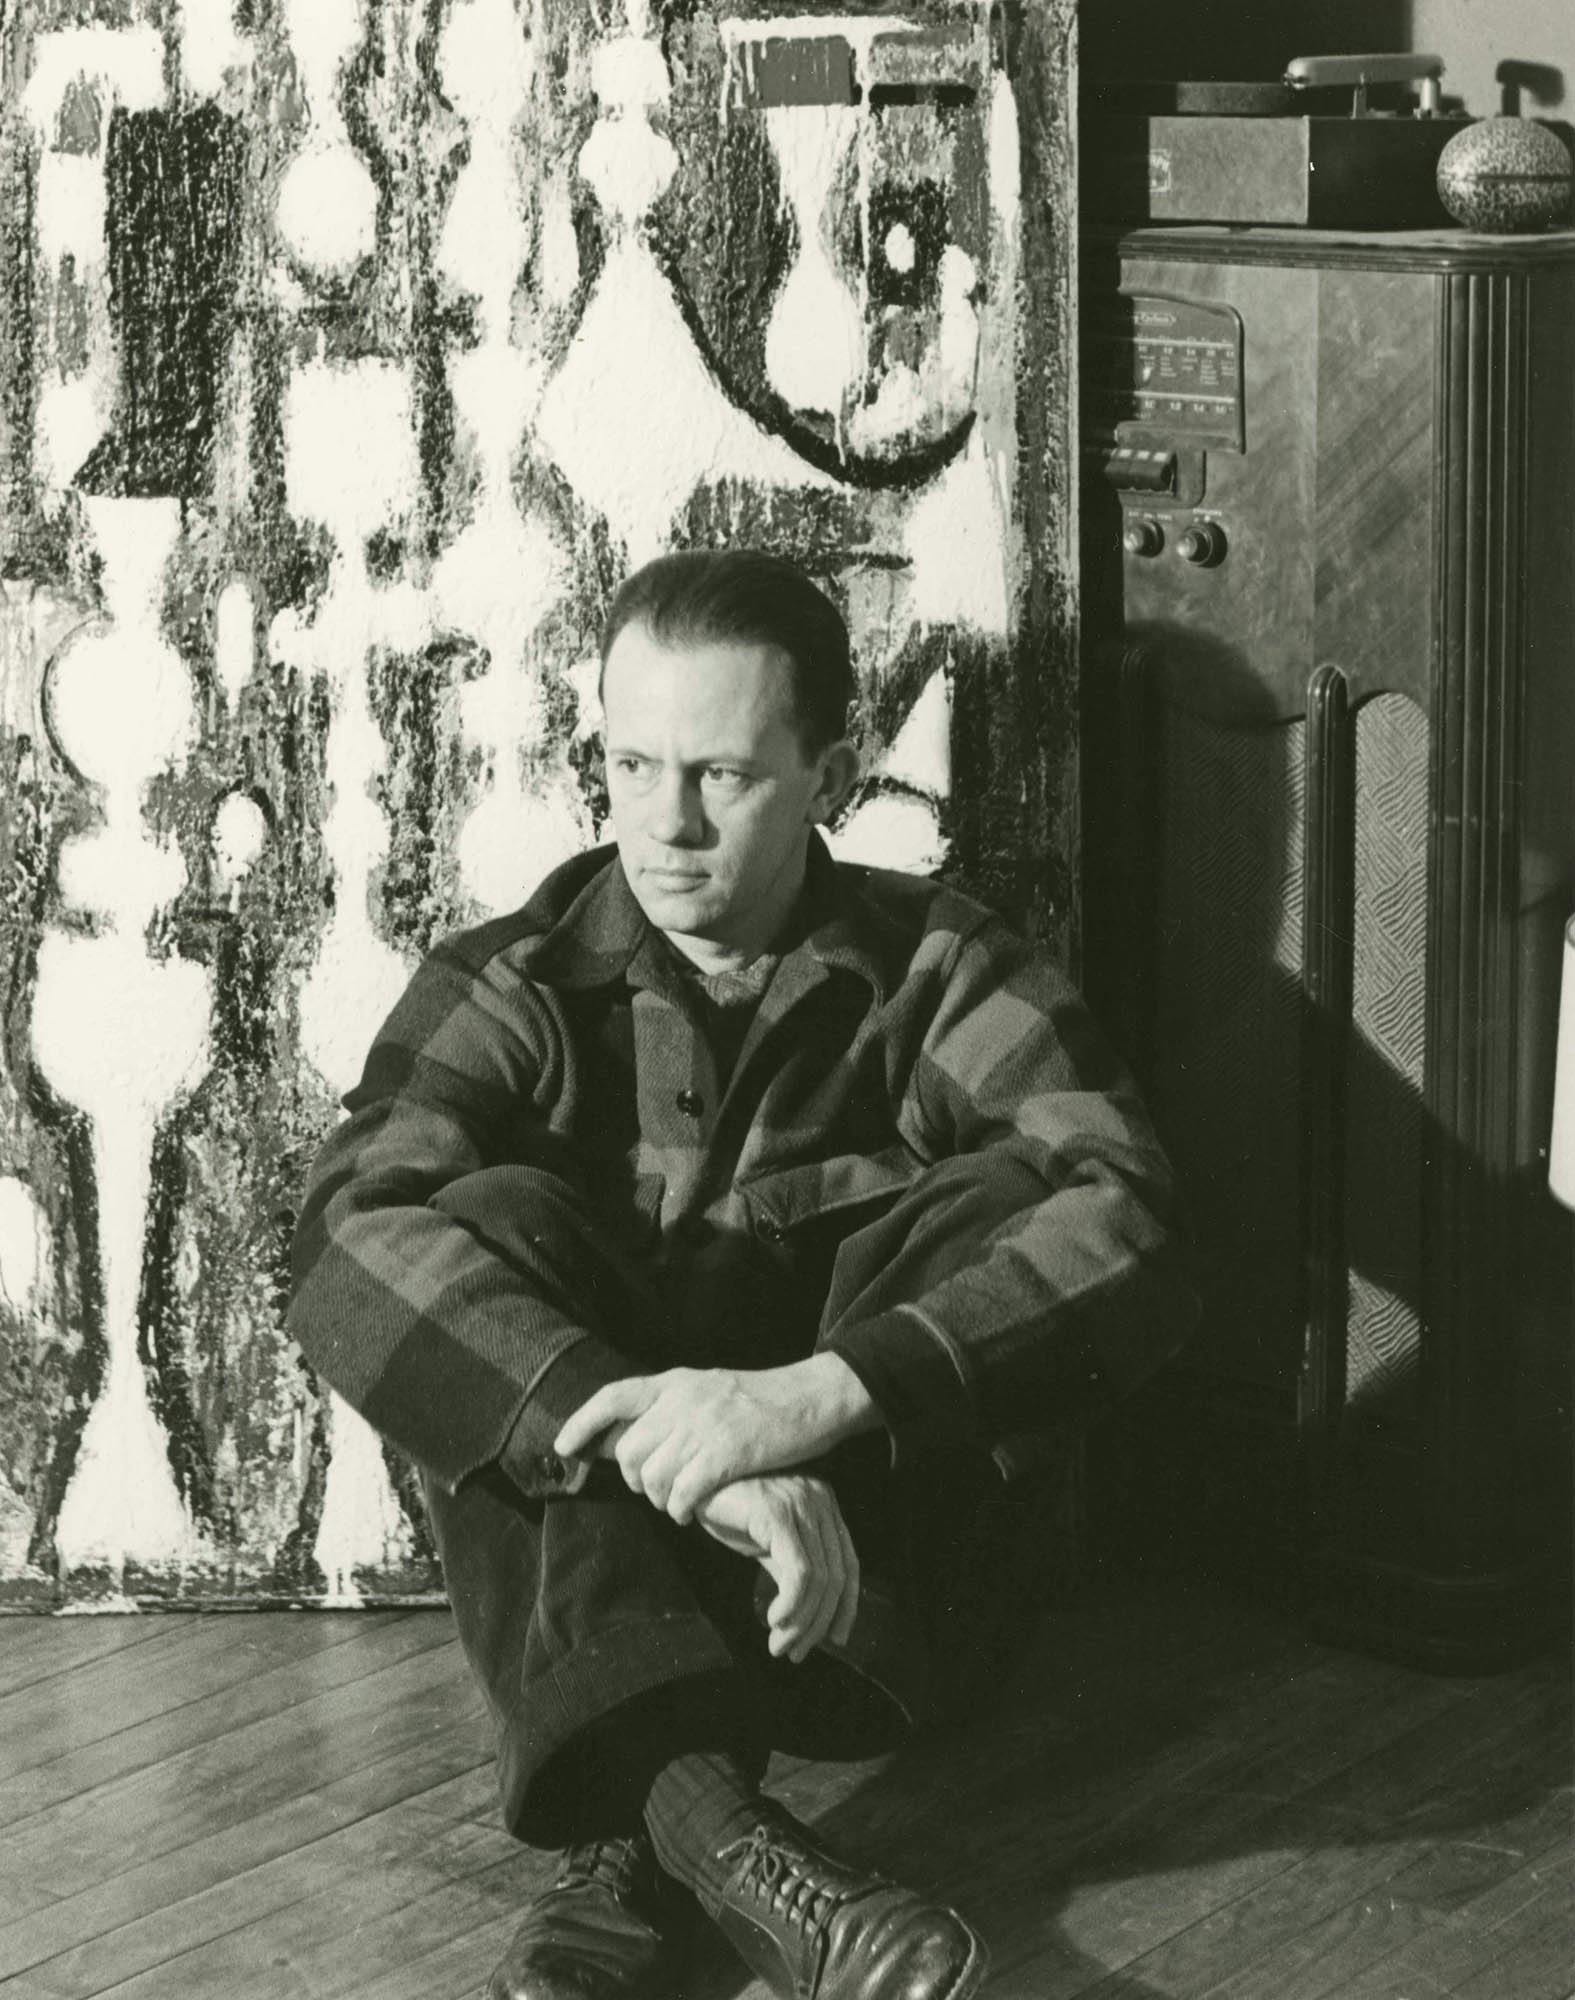 Richard Pousette-Dart, Self-portrait, Sloatsburg, NY, ca. 1953. – The Richard Pousette-Dart Foundation